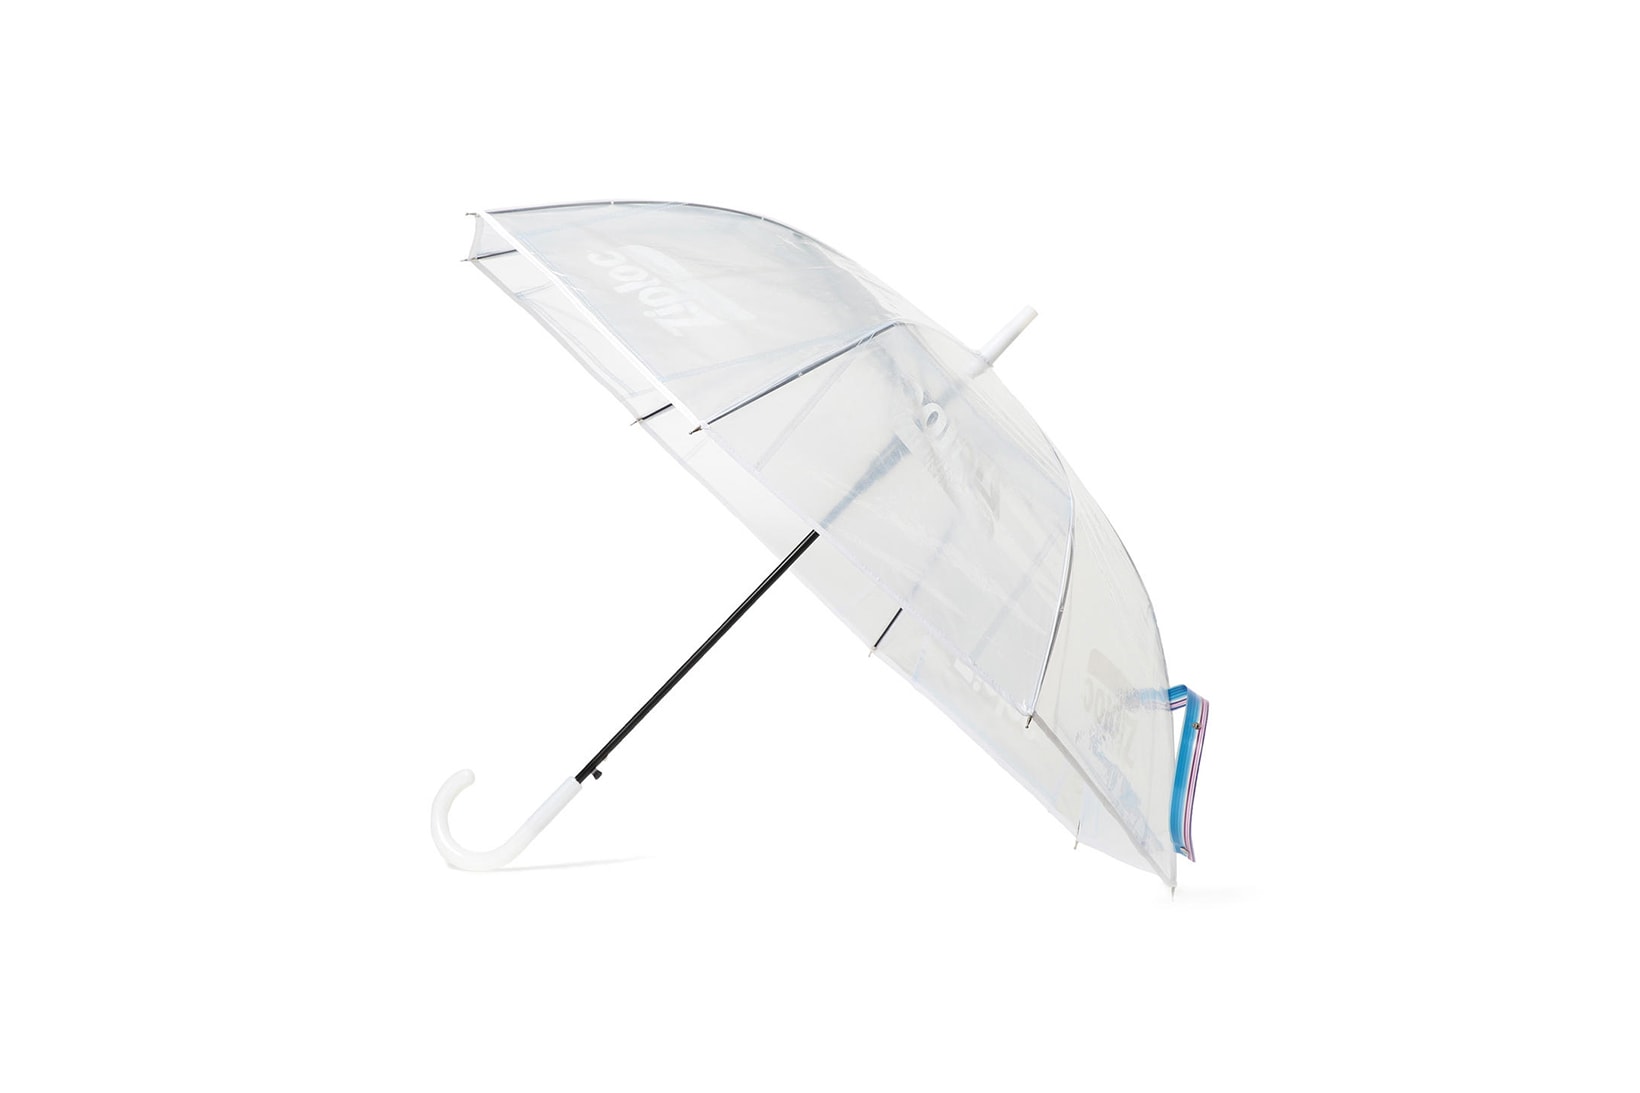 Ziploc BEAMS Umbrella Collaboration